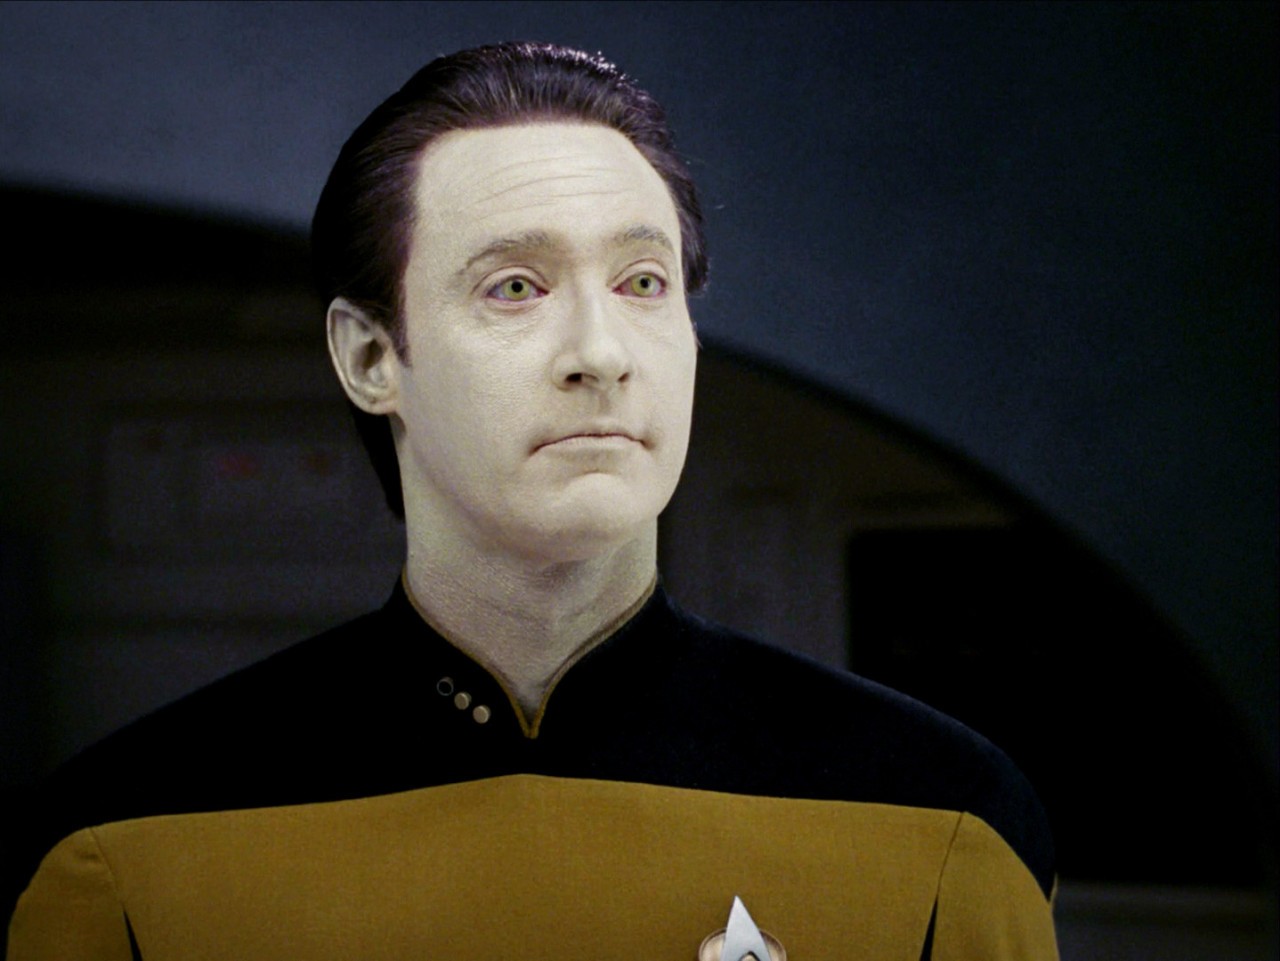 Mr Data from Star Trek: The Next Generation